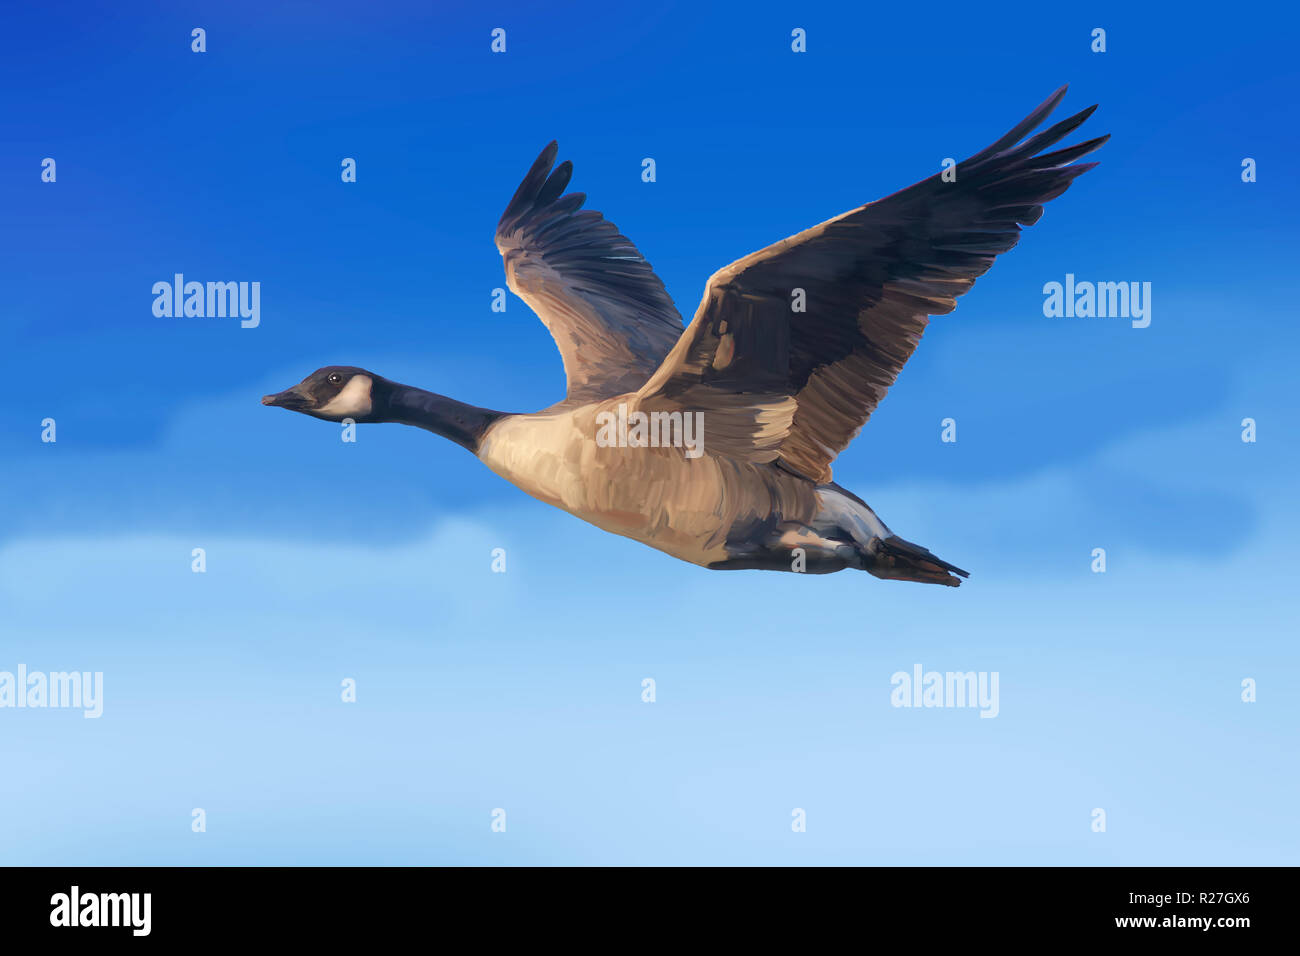 Canada Goose flying creative art Stock Photo